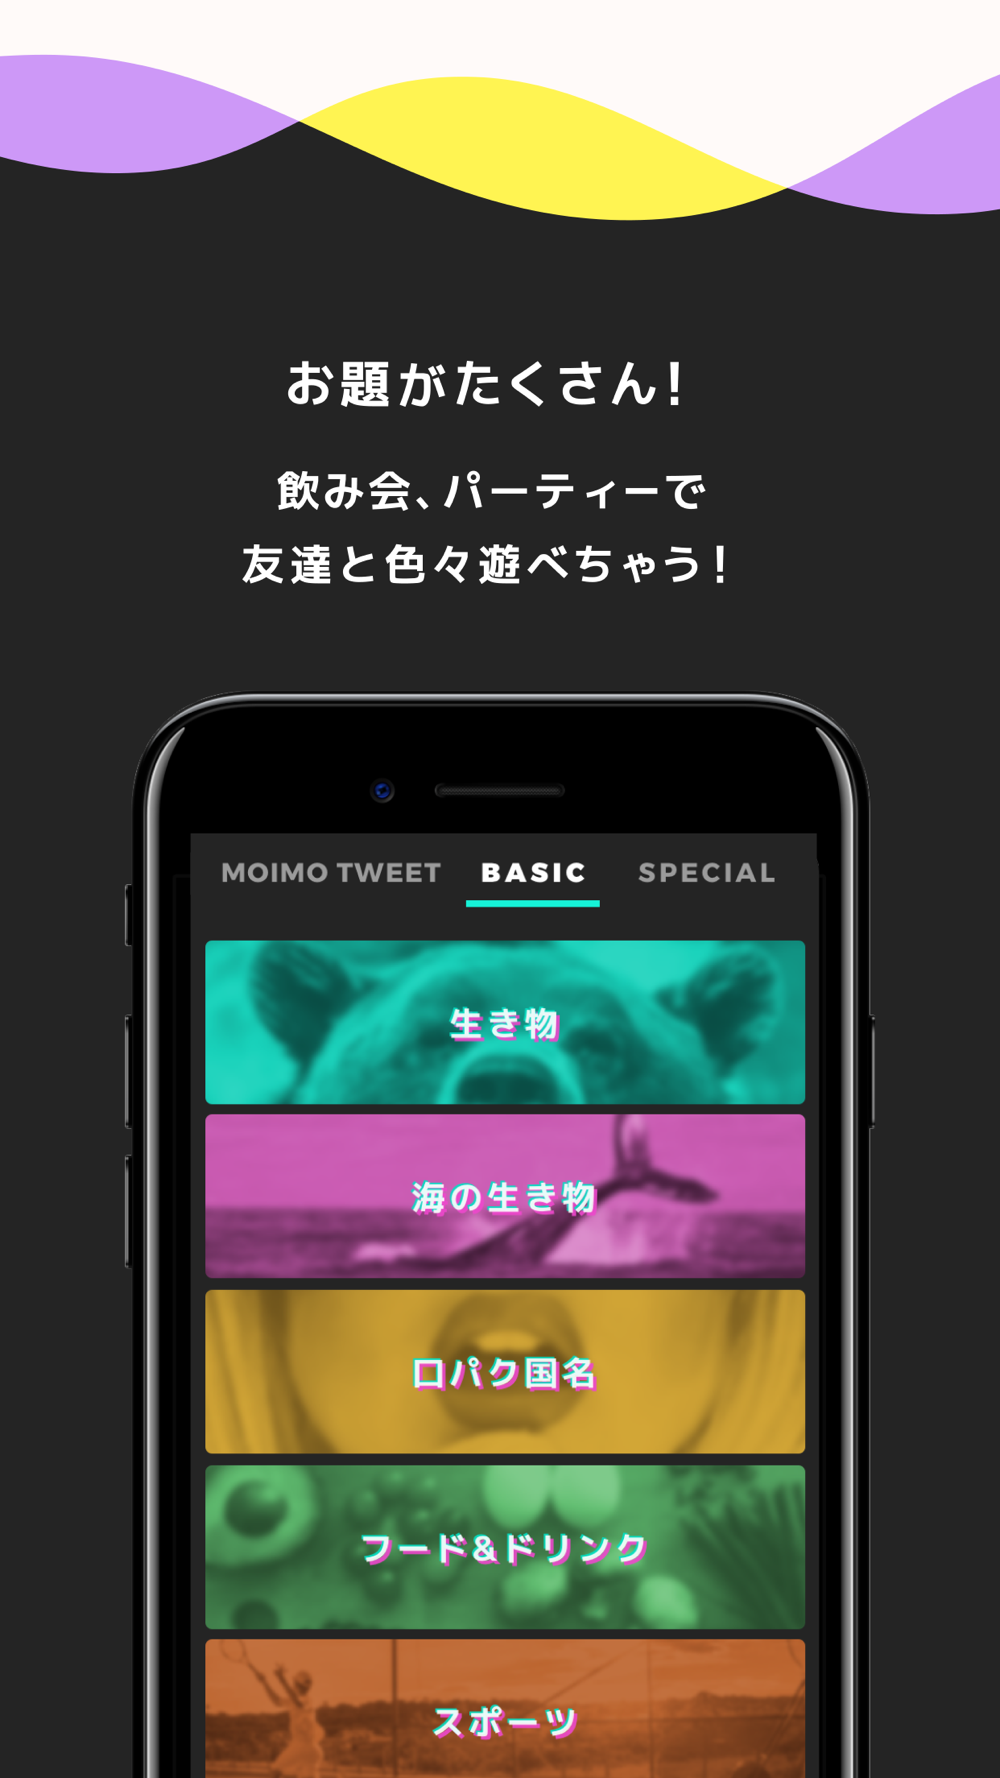 Moimo 飲み会でジェスチャーゲーム Free Download App For Iphone Steprimo Com